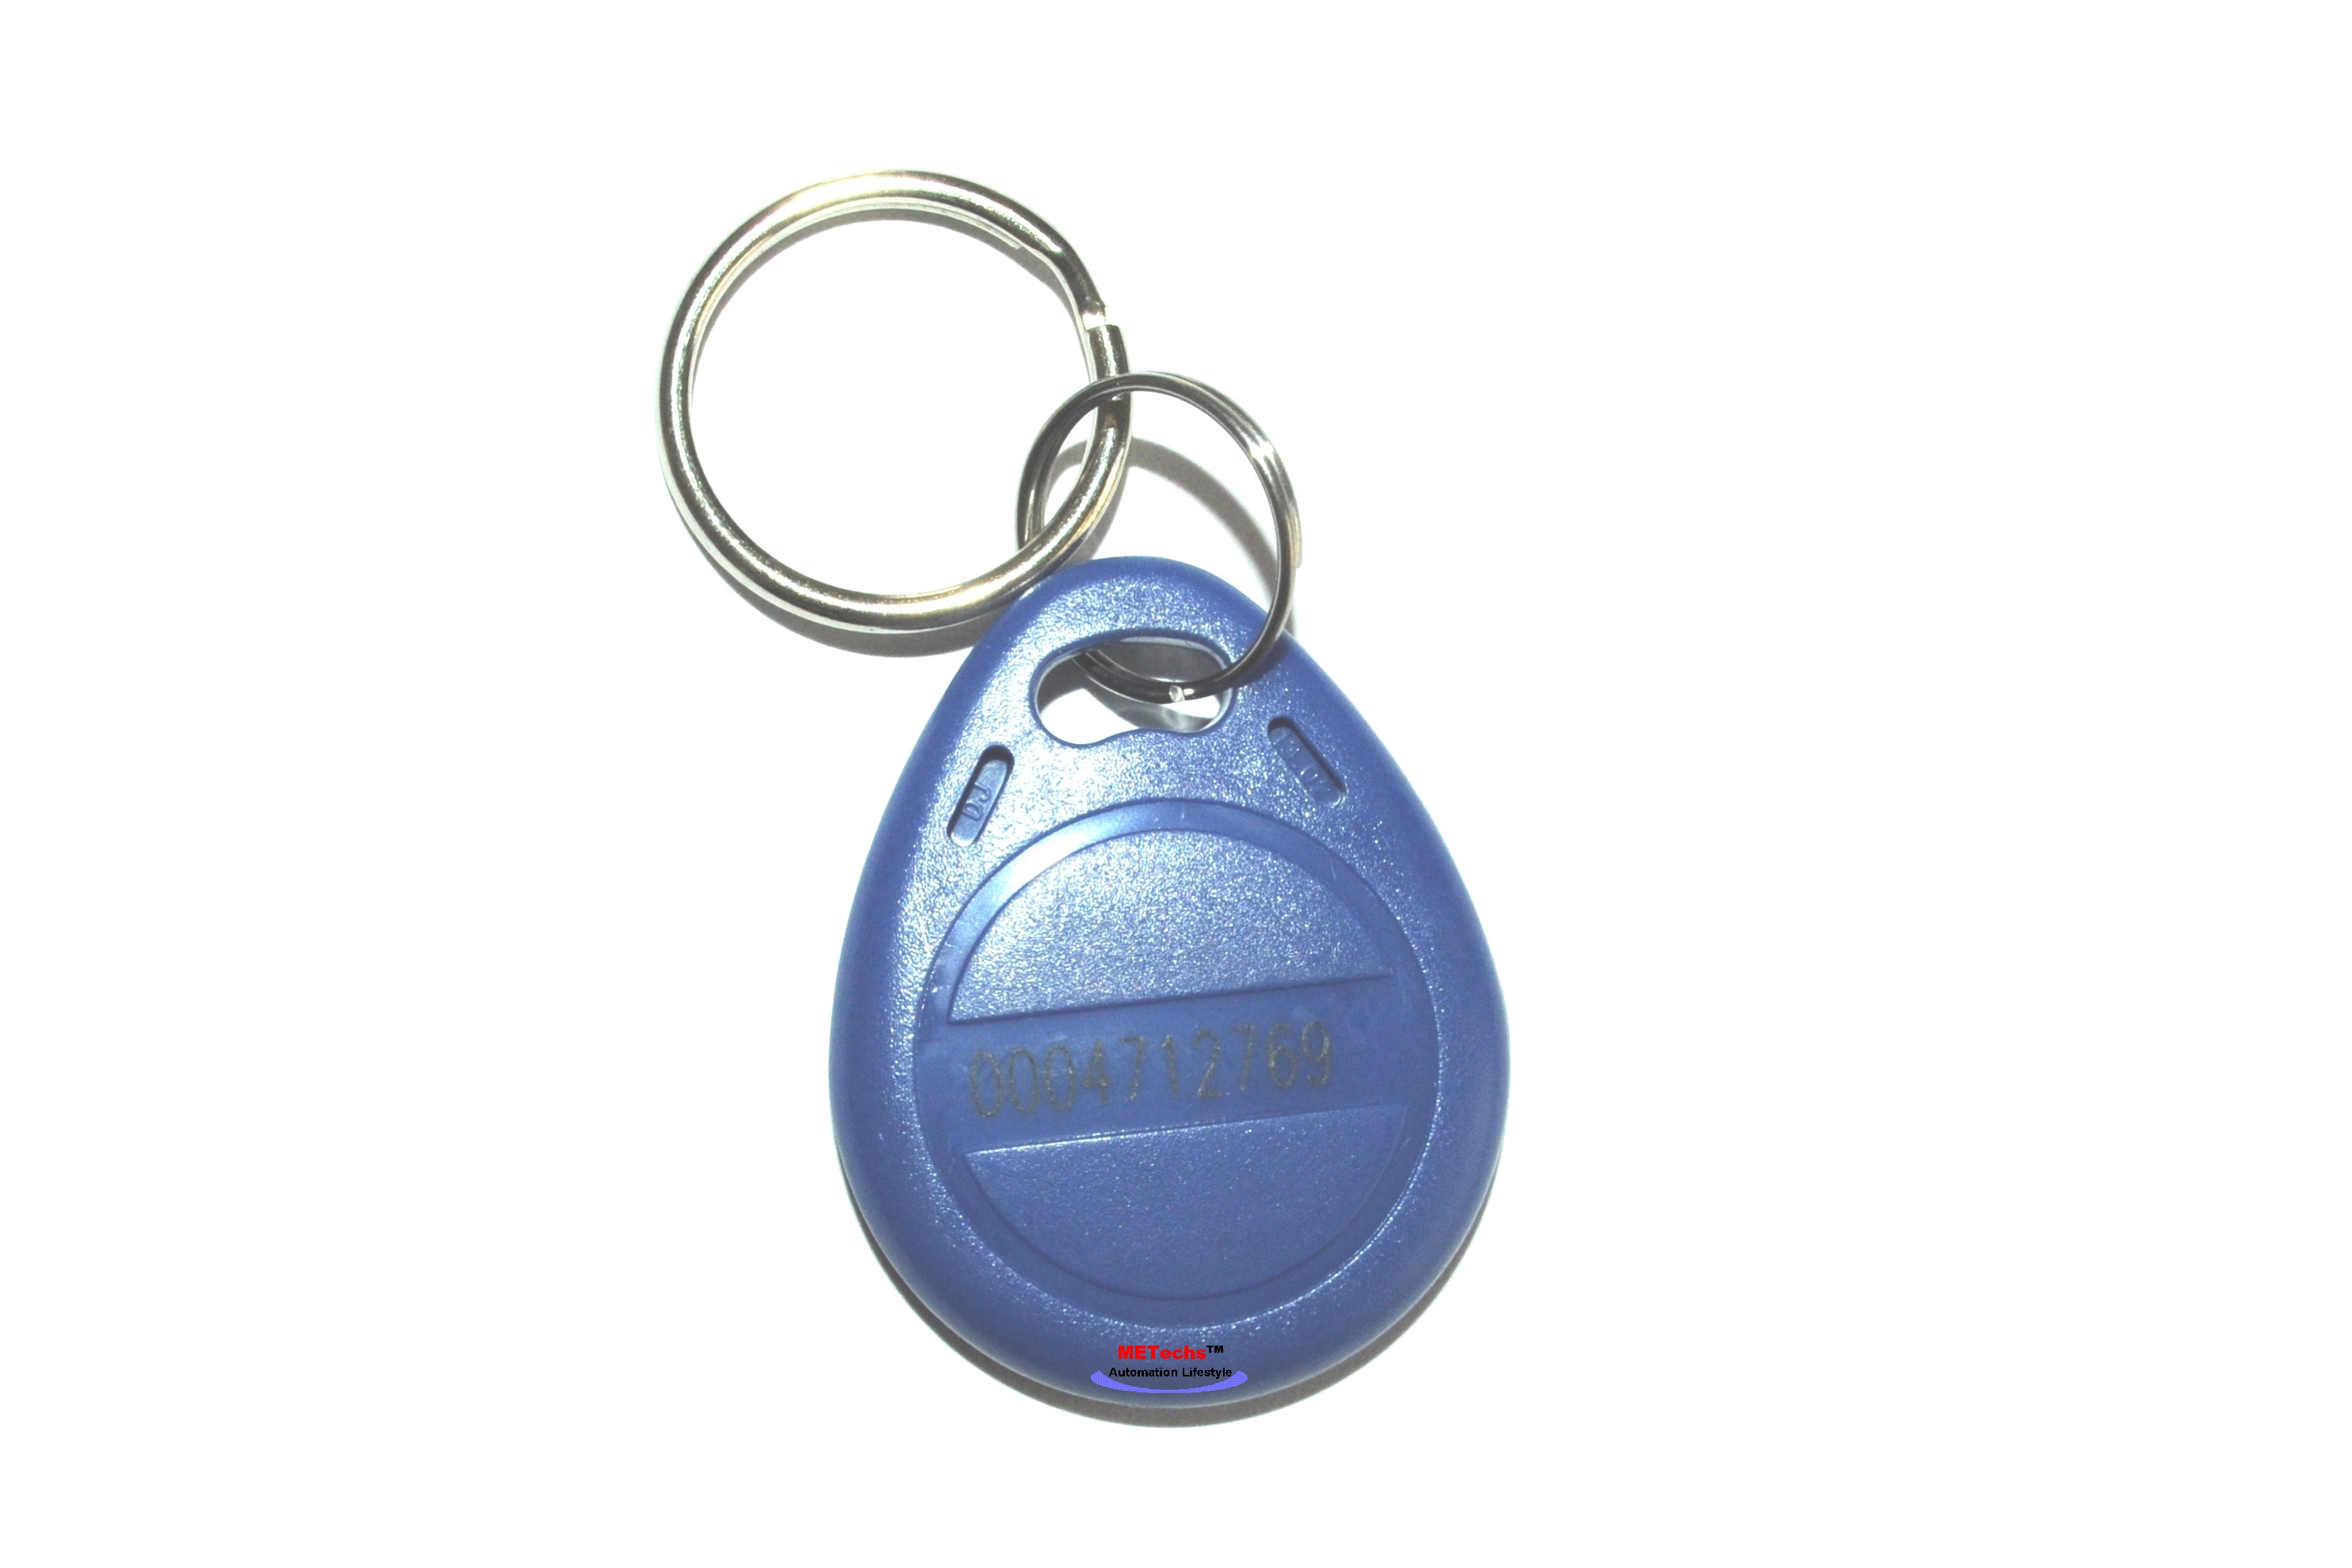 125KHZ EM Proximity RFID Tag Fob for Keyless Access Control